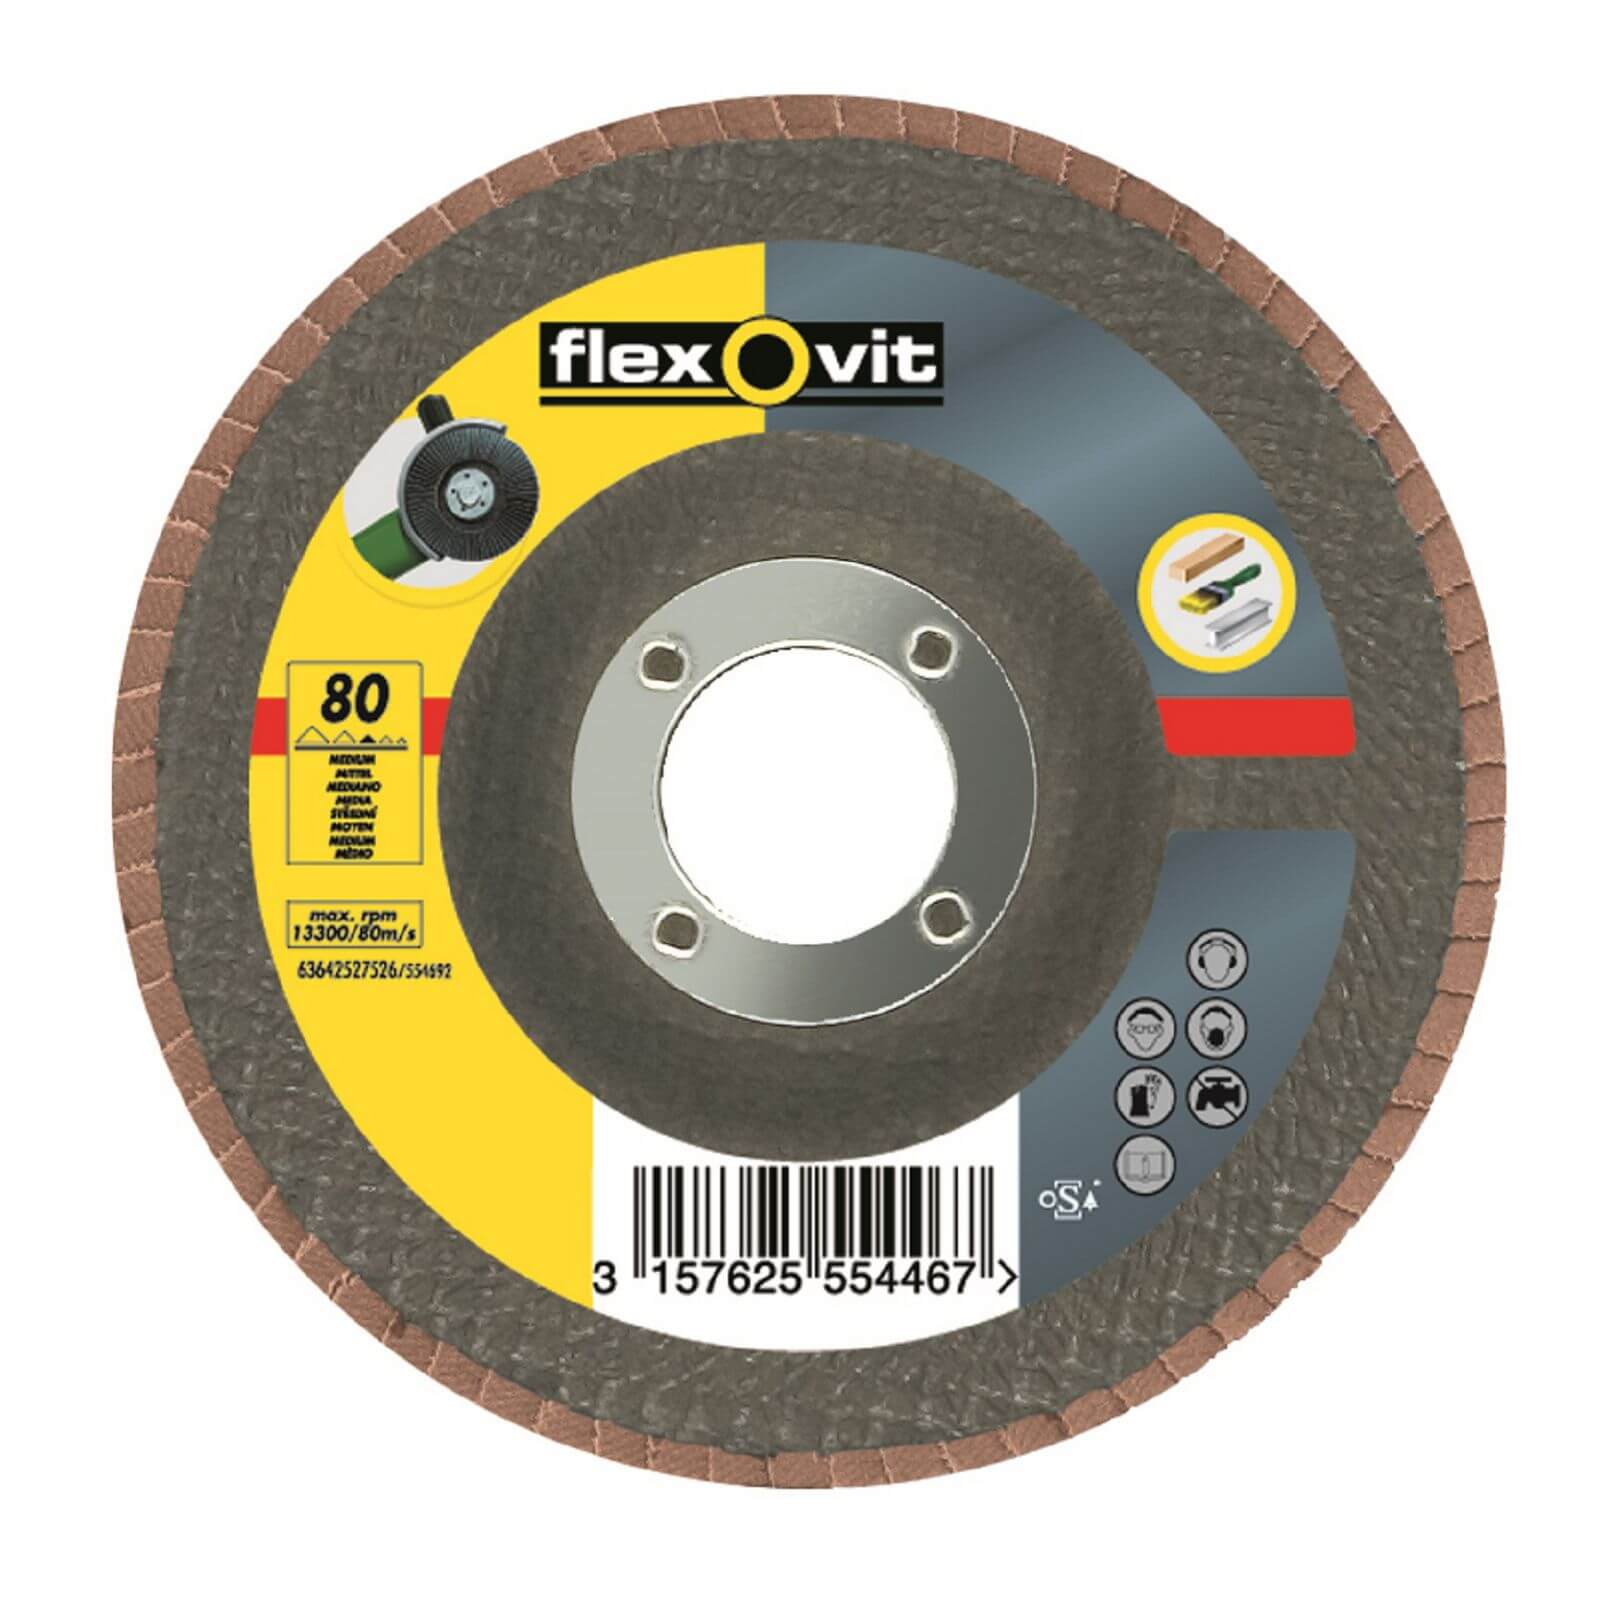 Flexovit 63642527526 Angle Grinder Flap Disc - 115m x 22mm - 80G